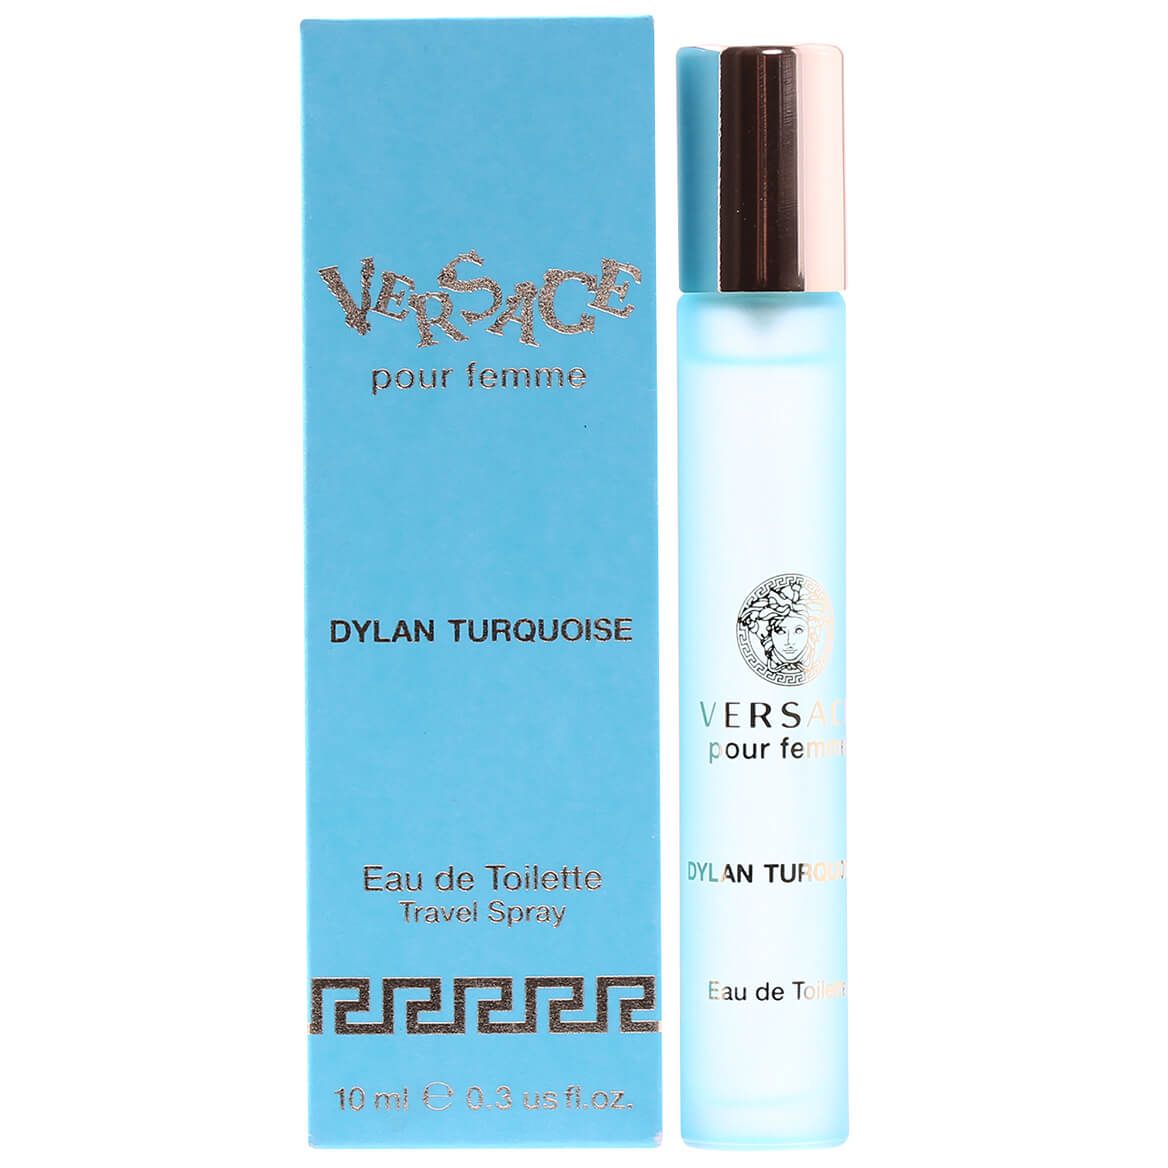 Versace Dylan Turquoise for Women EDT Travel Spray, 0.3 fl. oz. + '-' + 377319